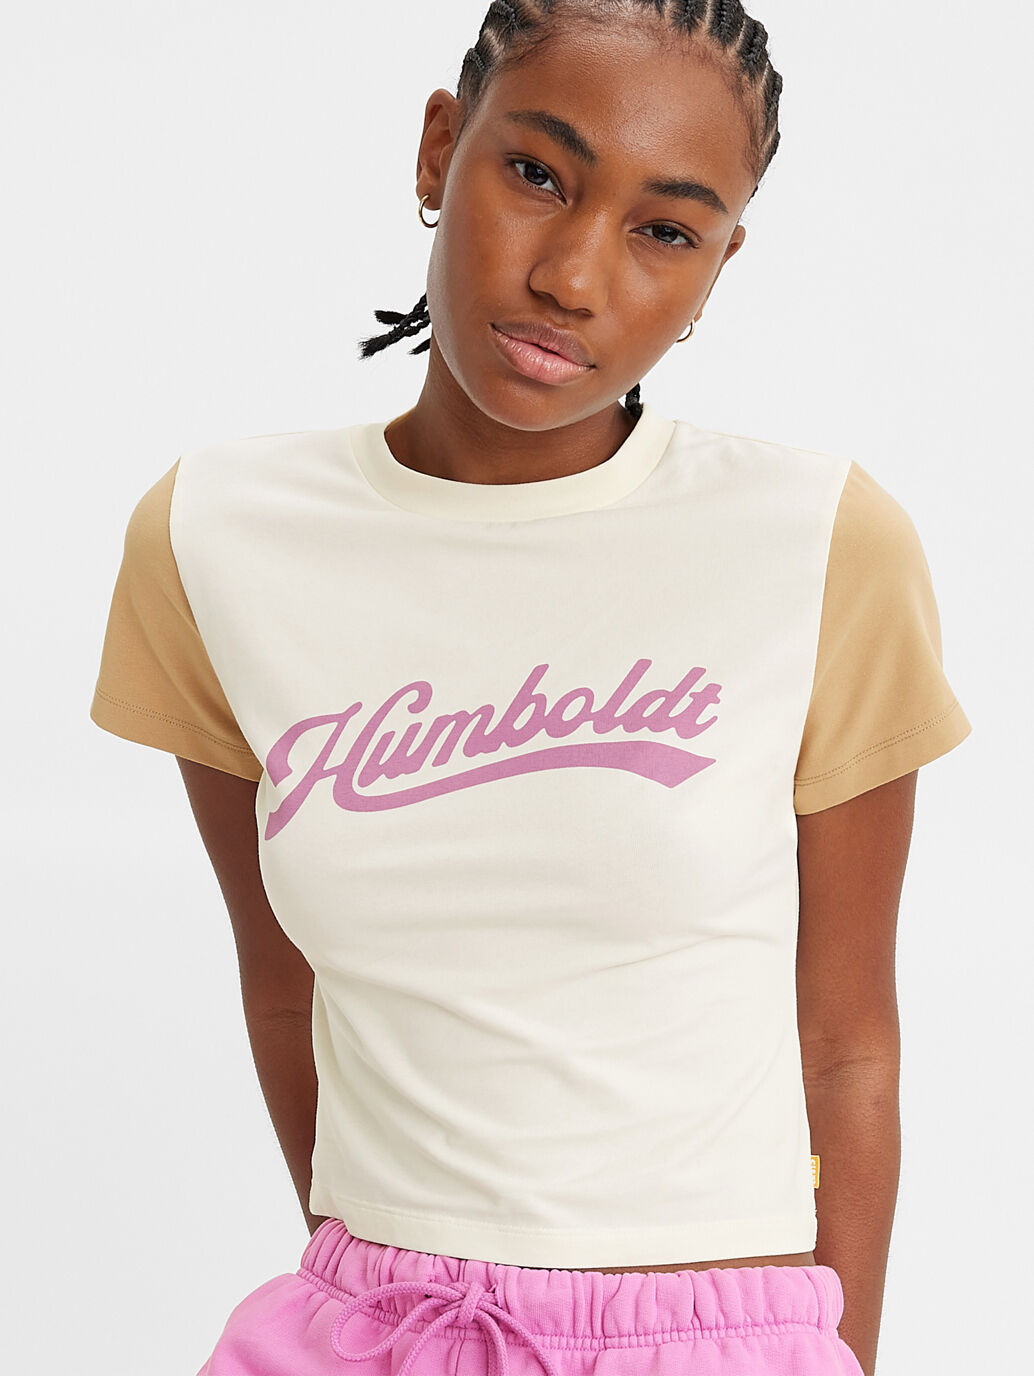 Multi-Colour Women's T-Shirt - Browse Our Collection Online